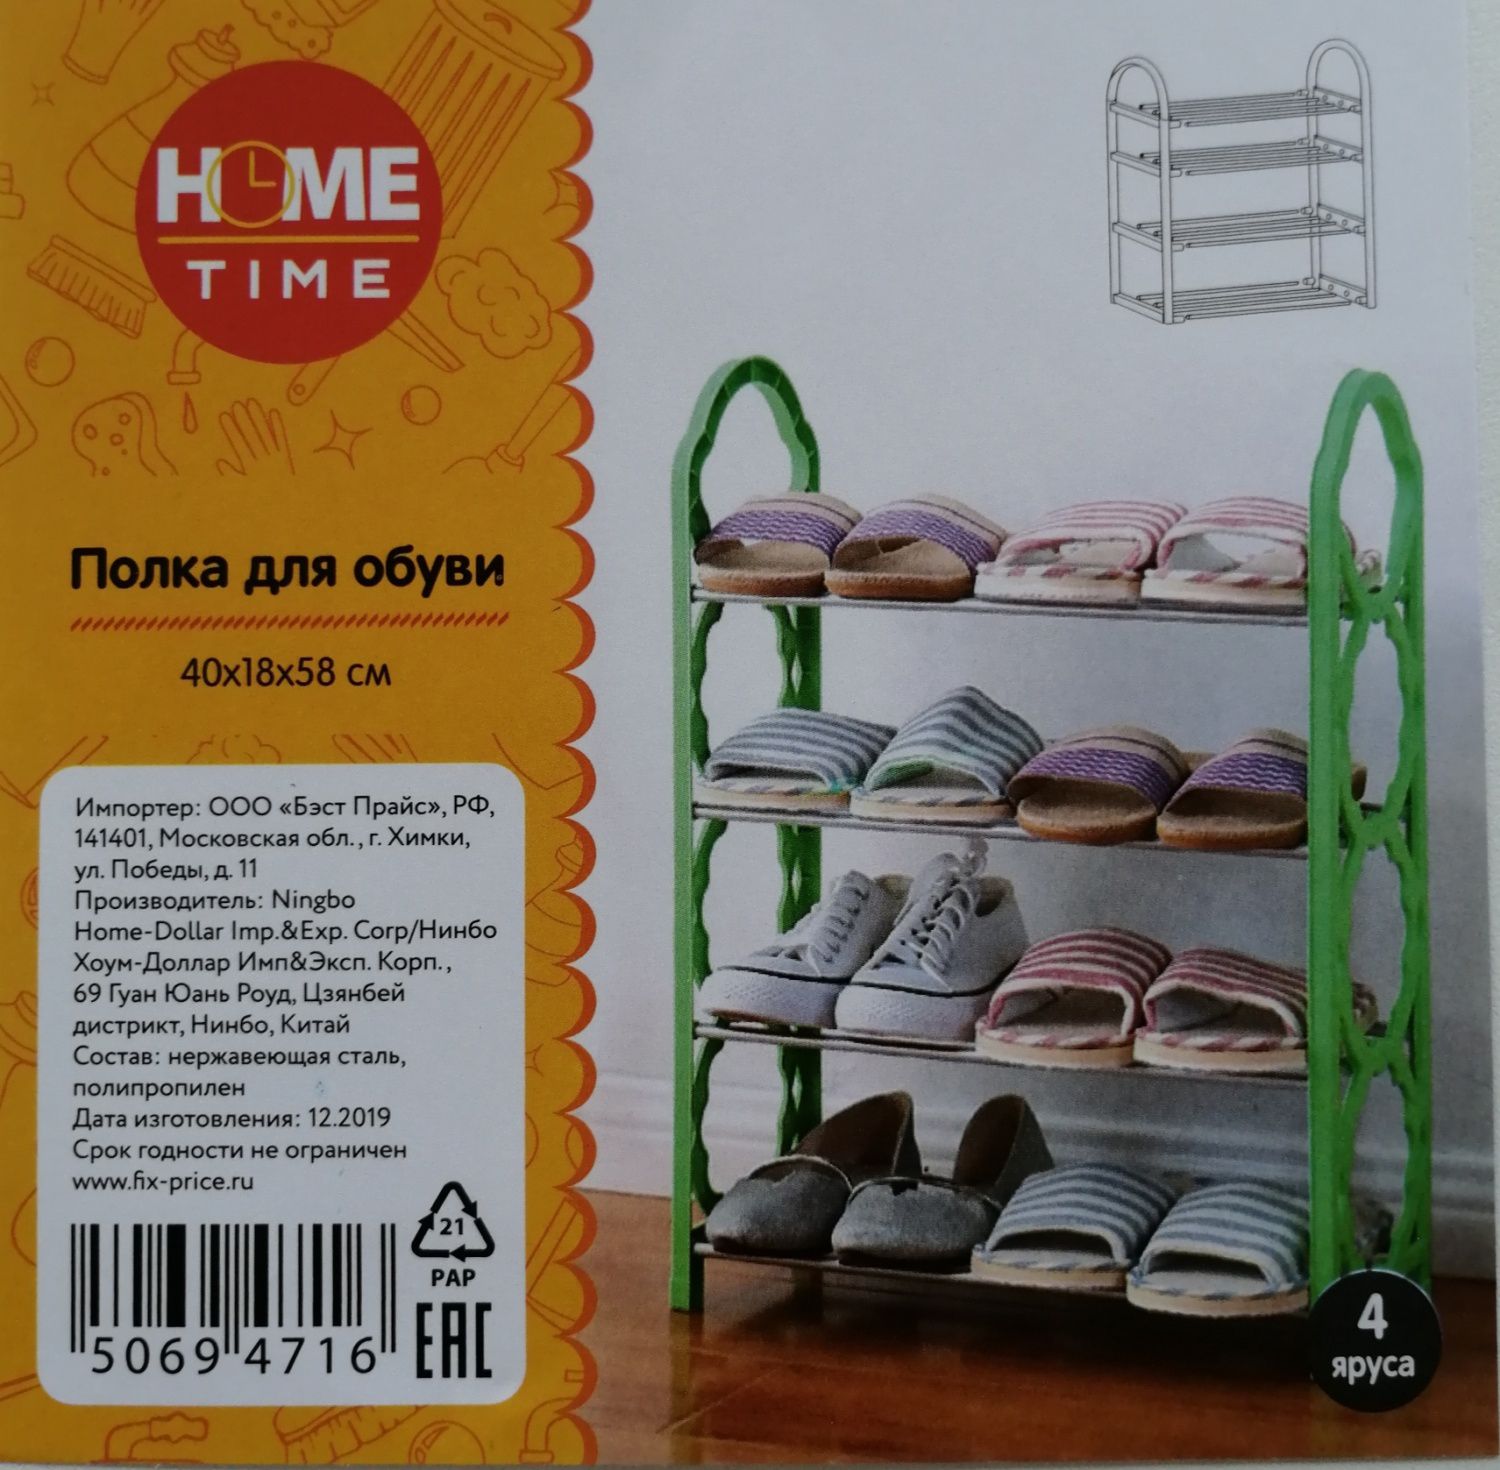 Полка для обуви Hometime FIXPRICE